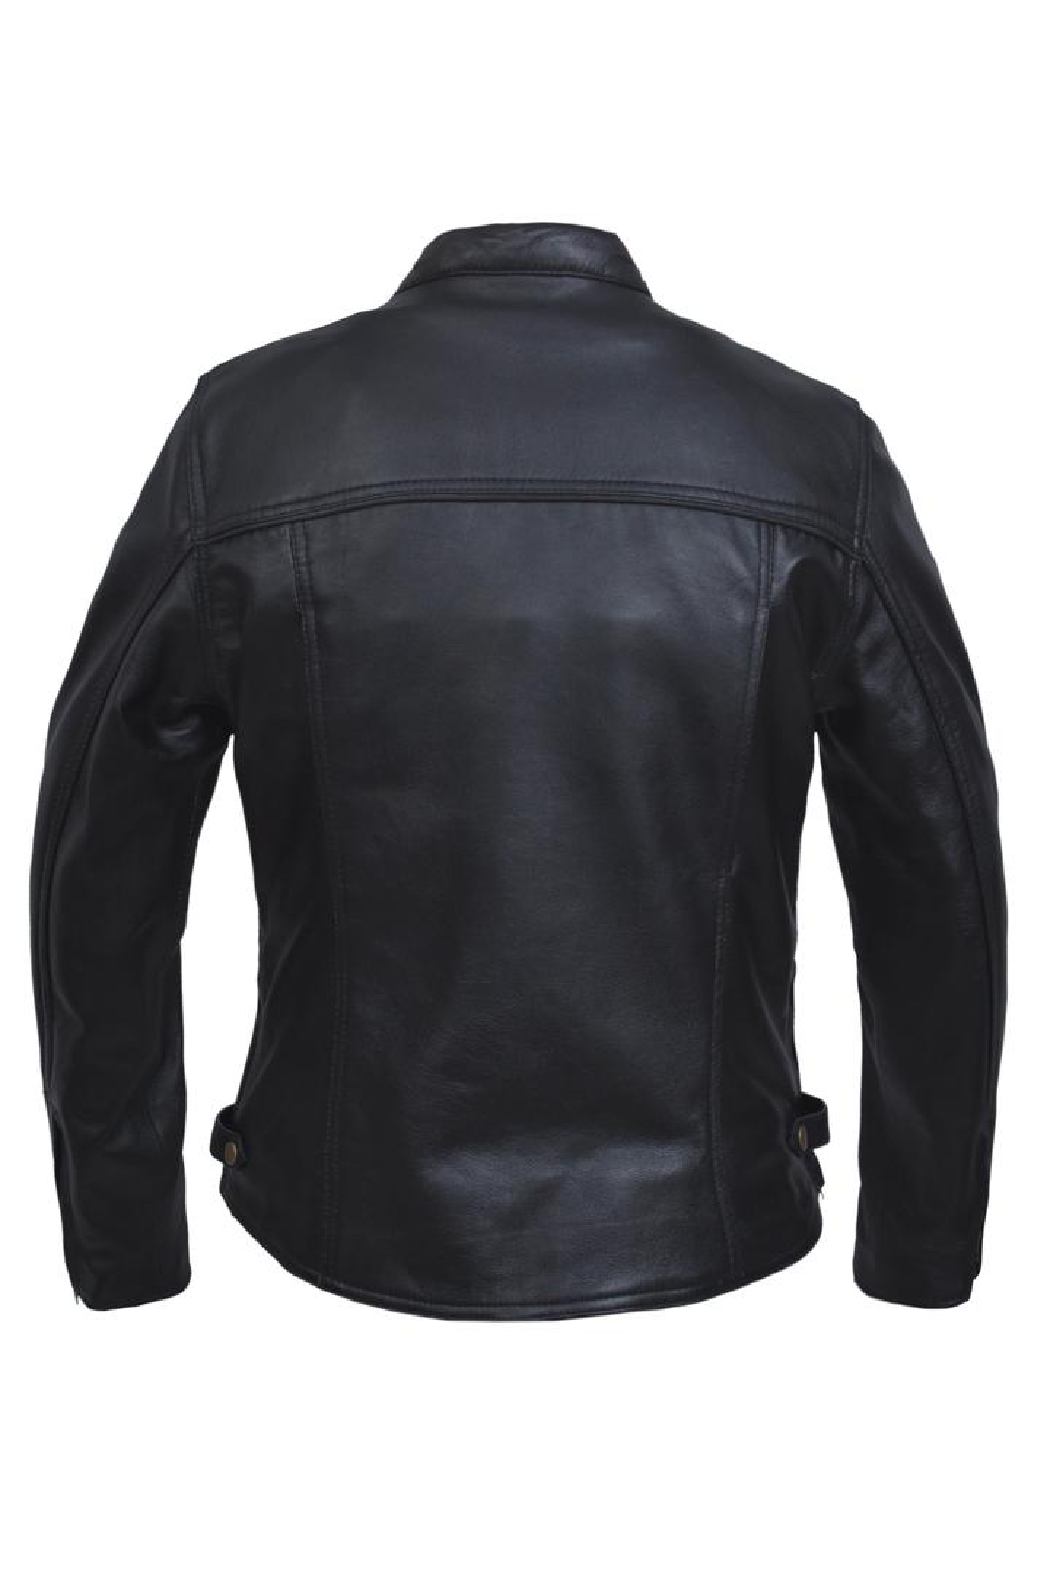 Unik Premium Leather Jacket